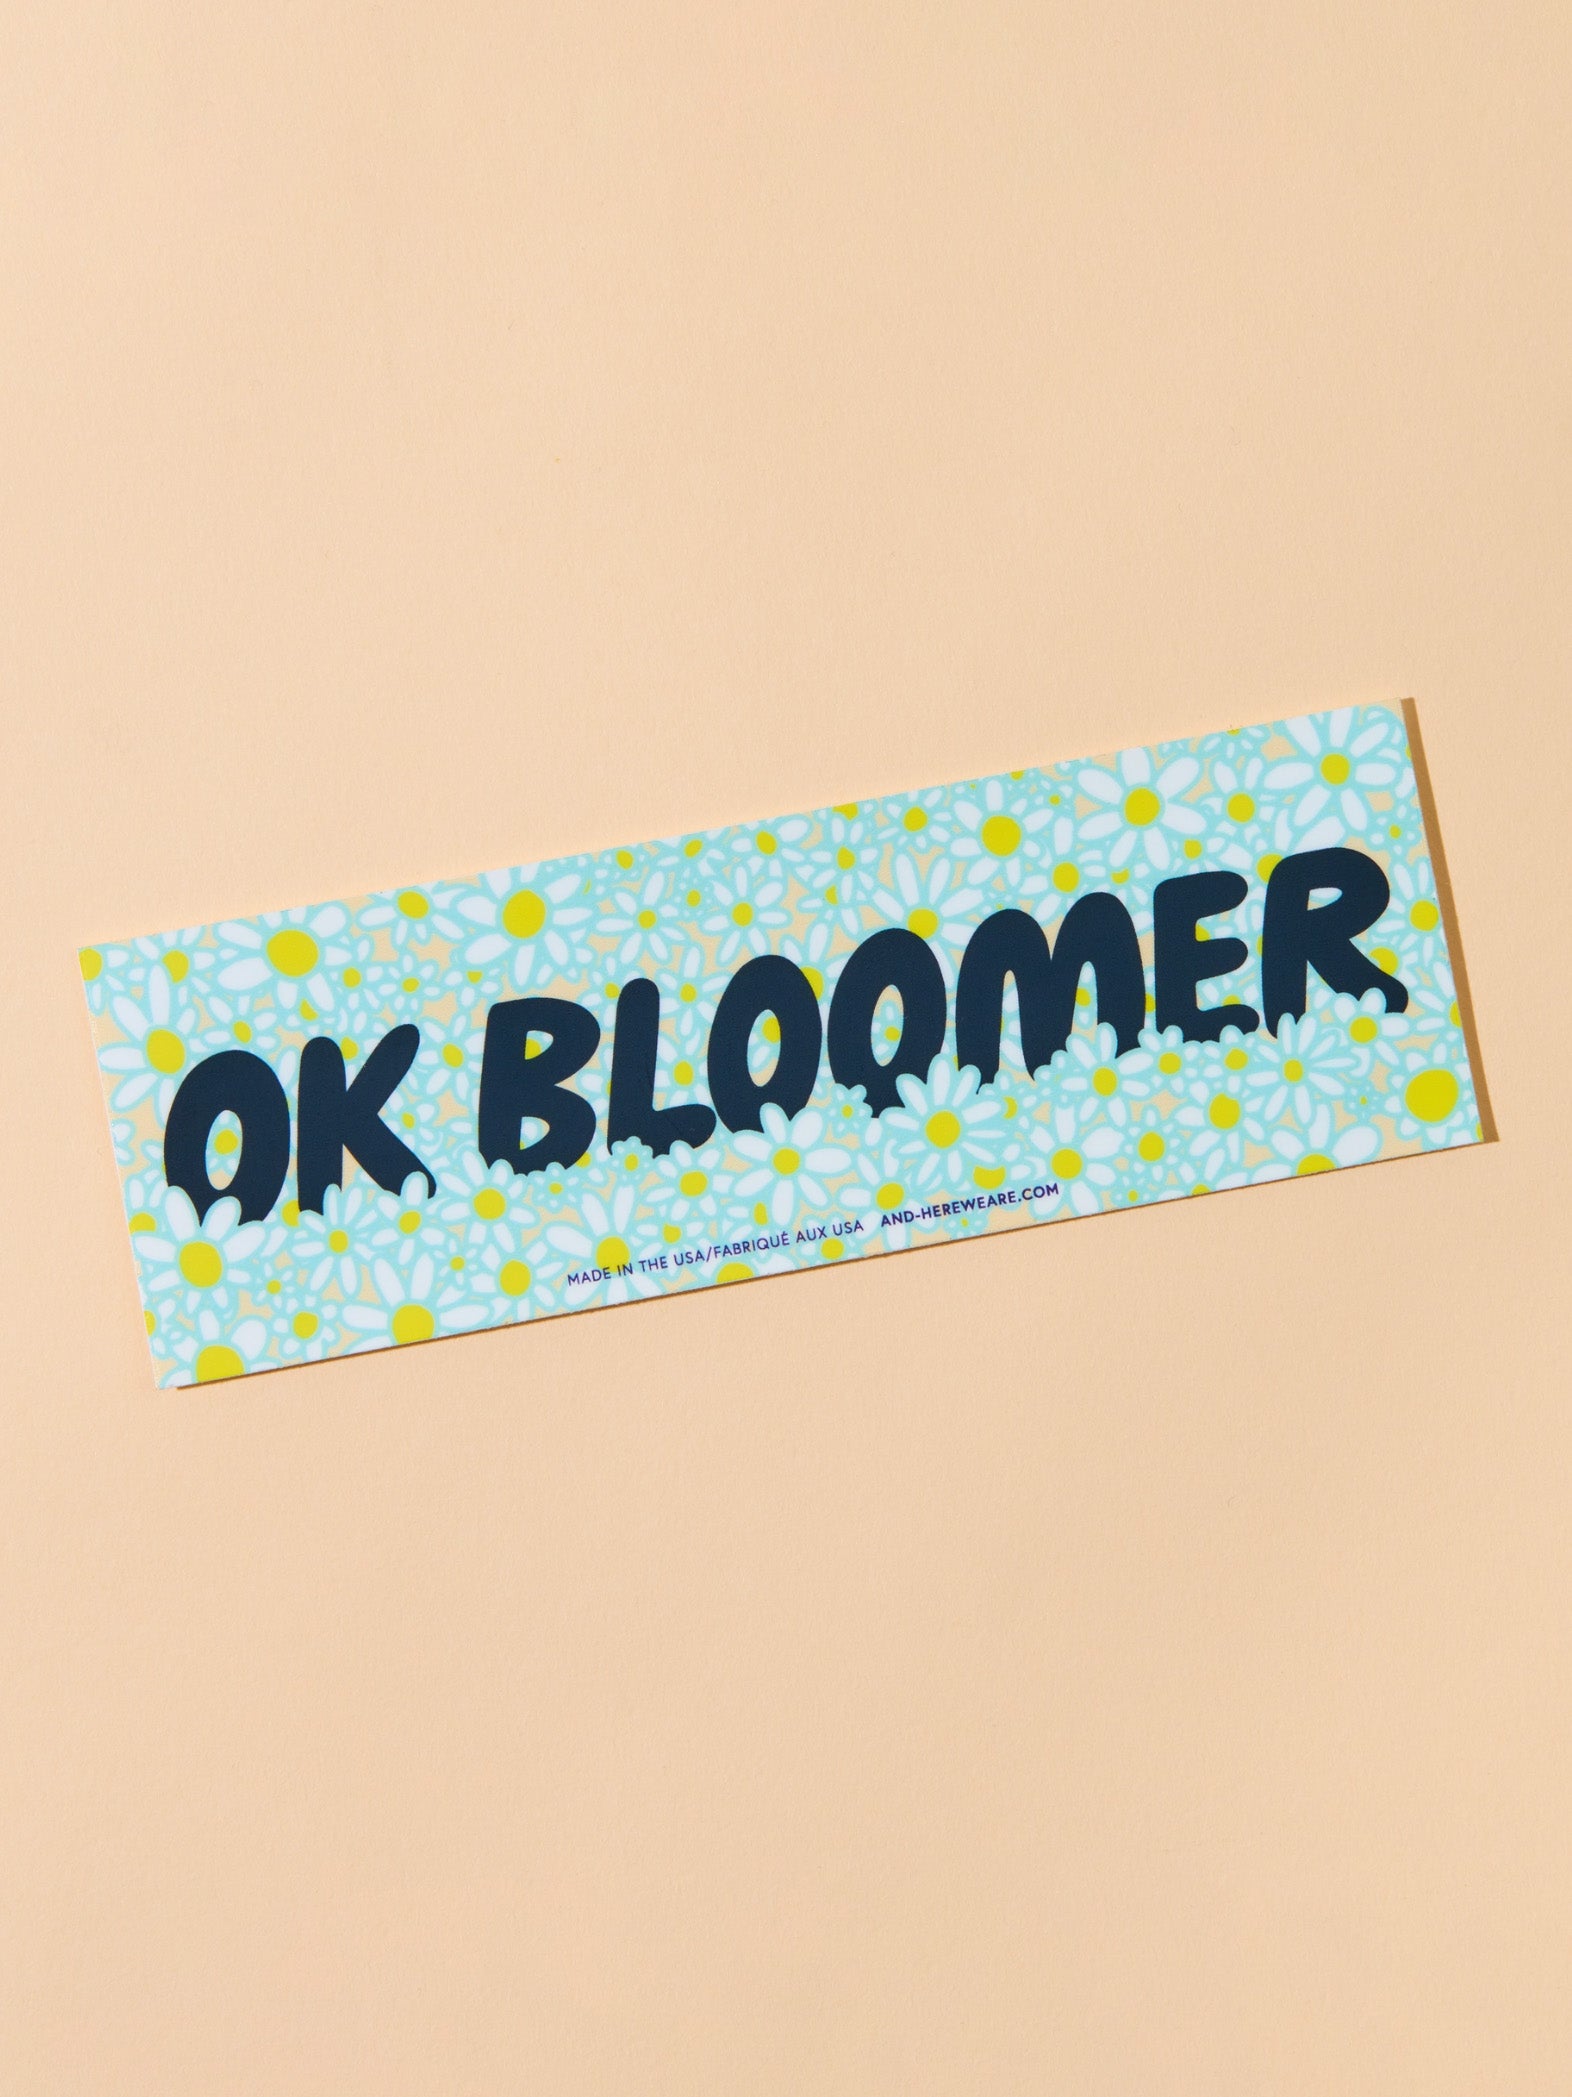 ok bloomer bumper sticker